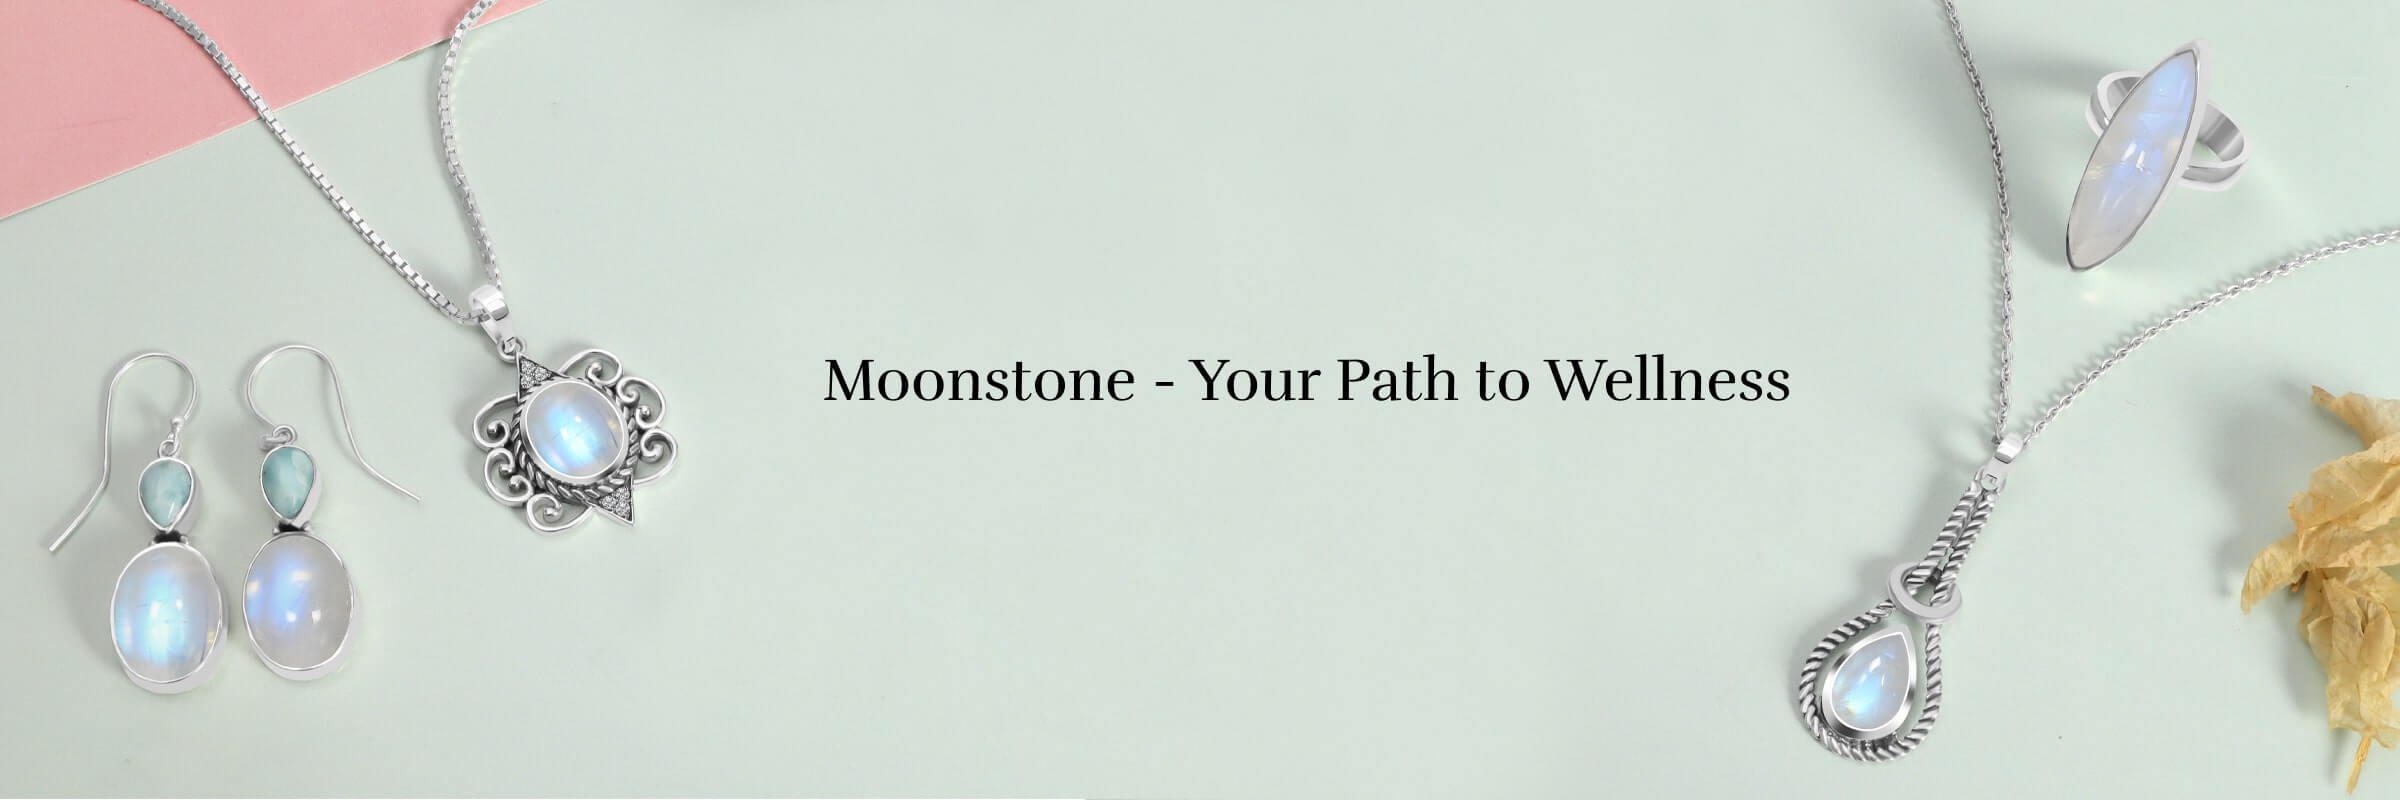 Benefits of wearing moonstone